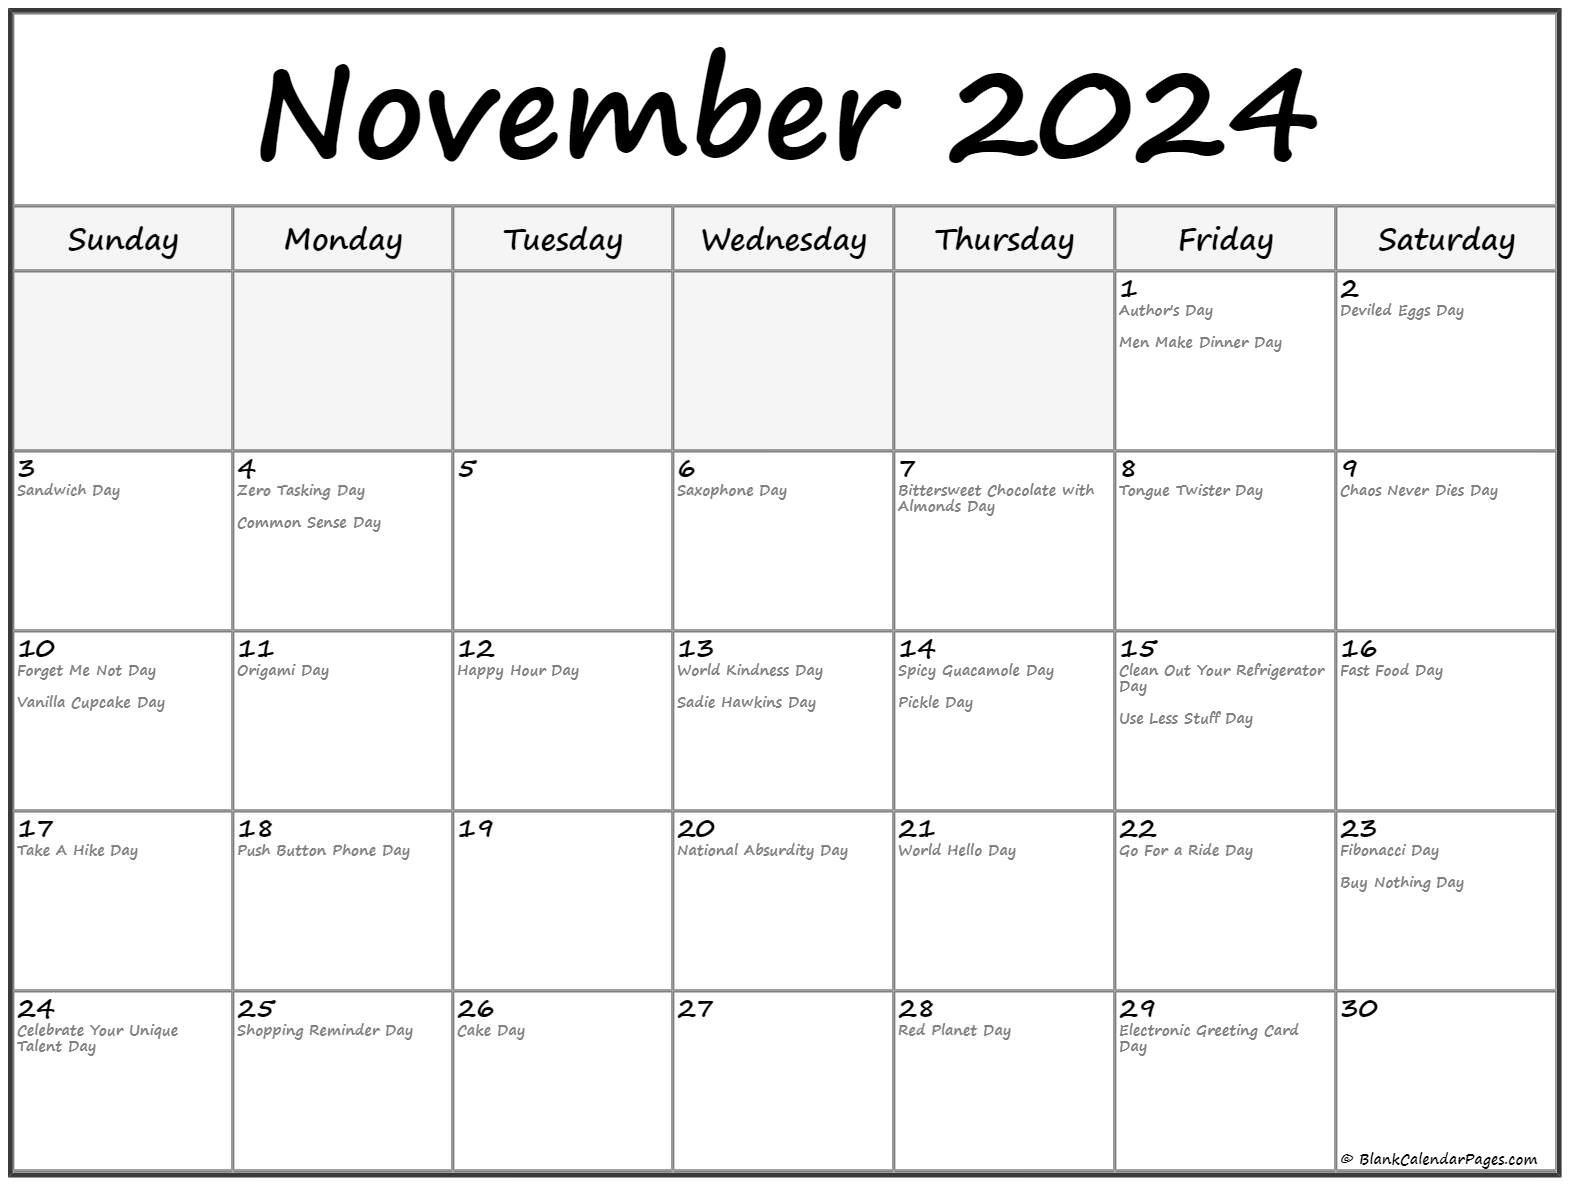 november 2020 holidays manila